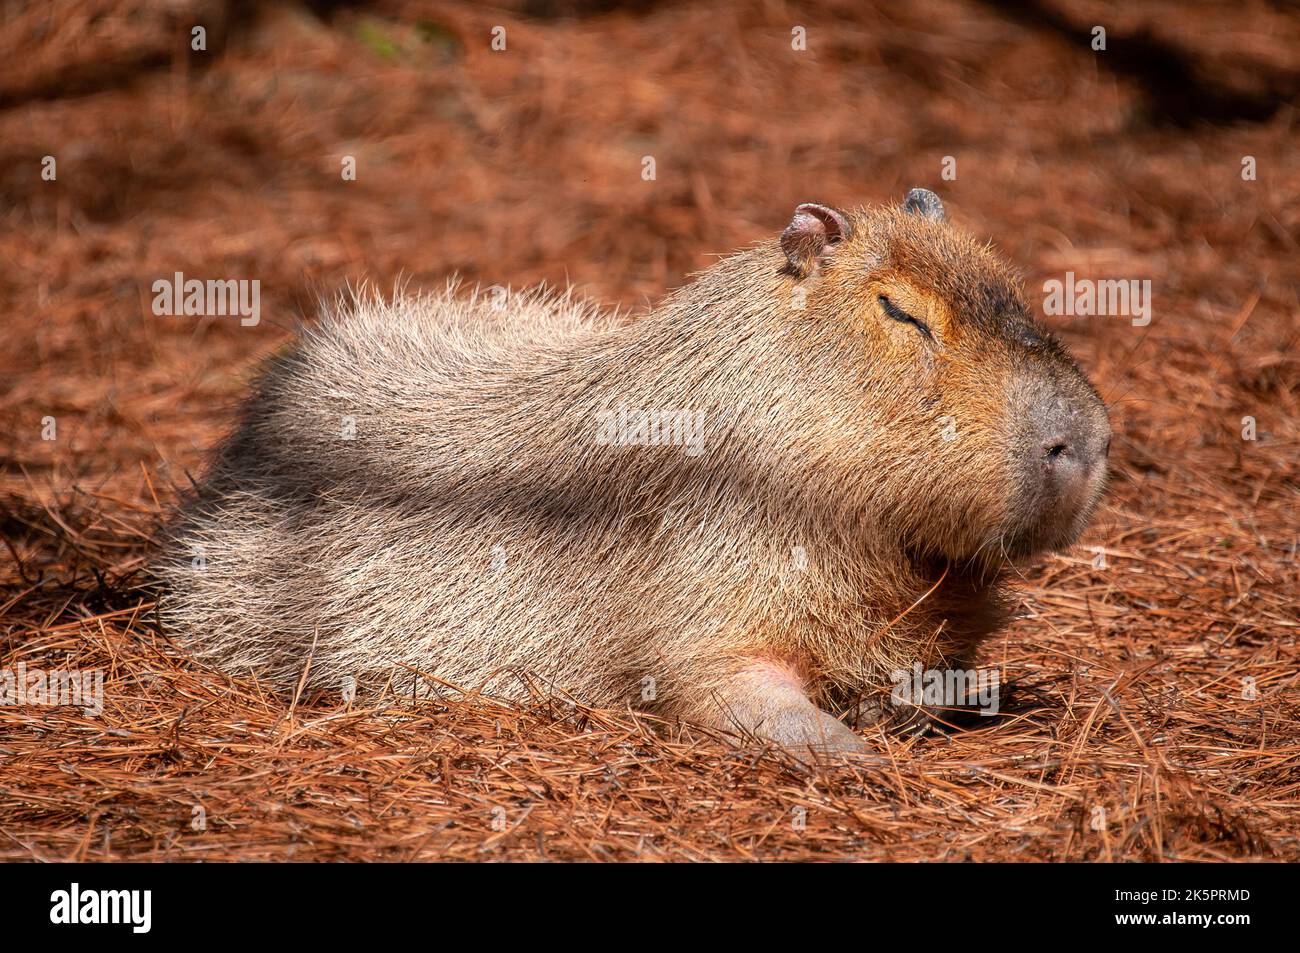 Capybara Wallpaper  NawPic